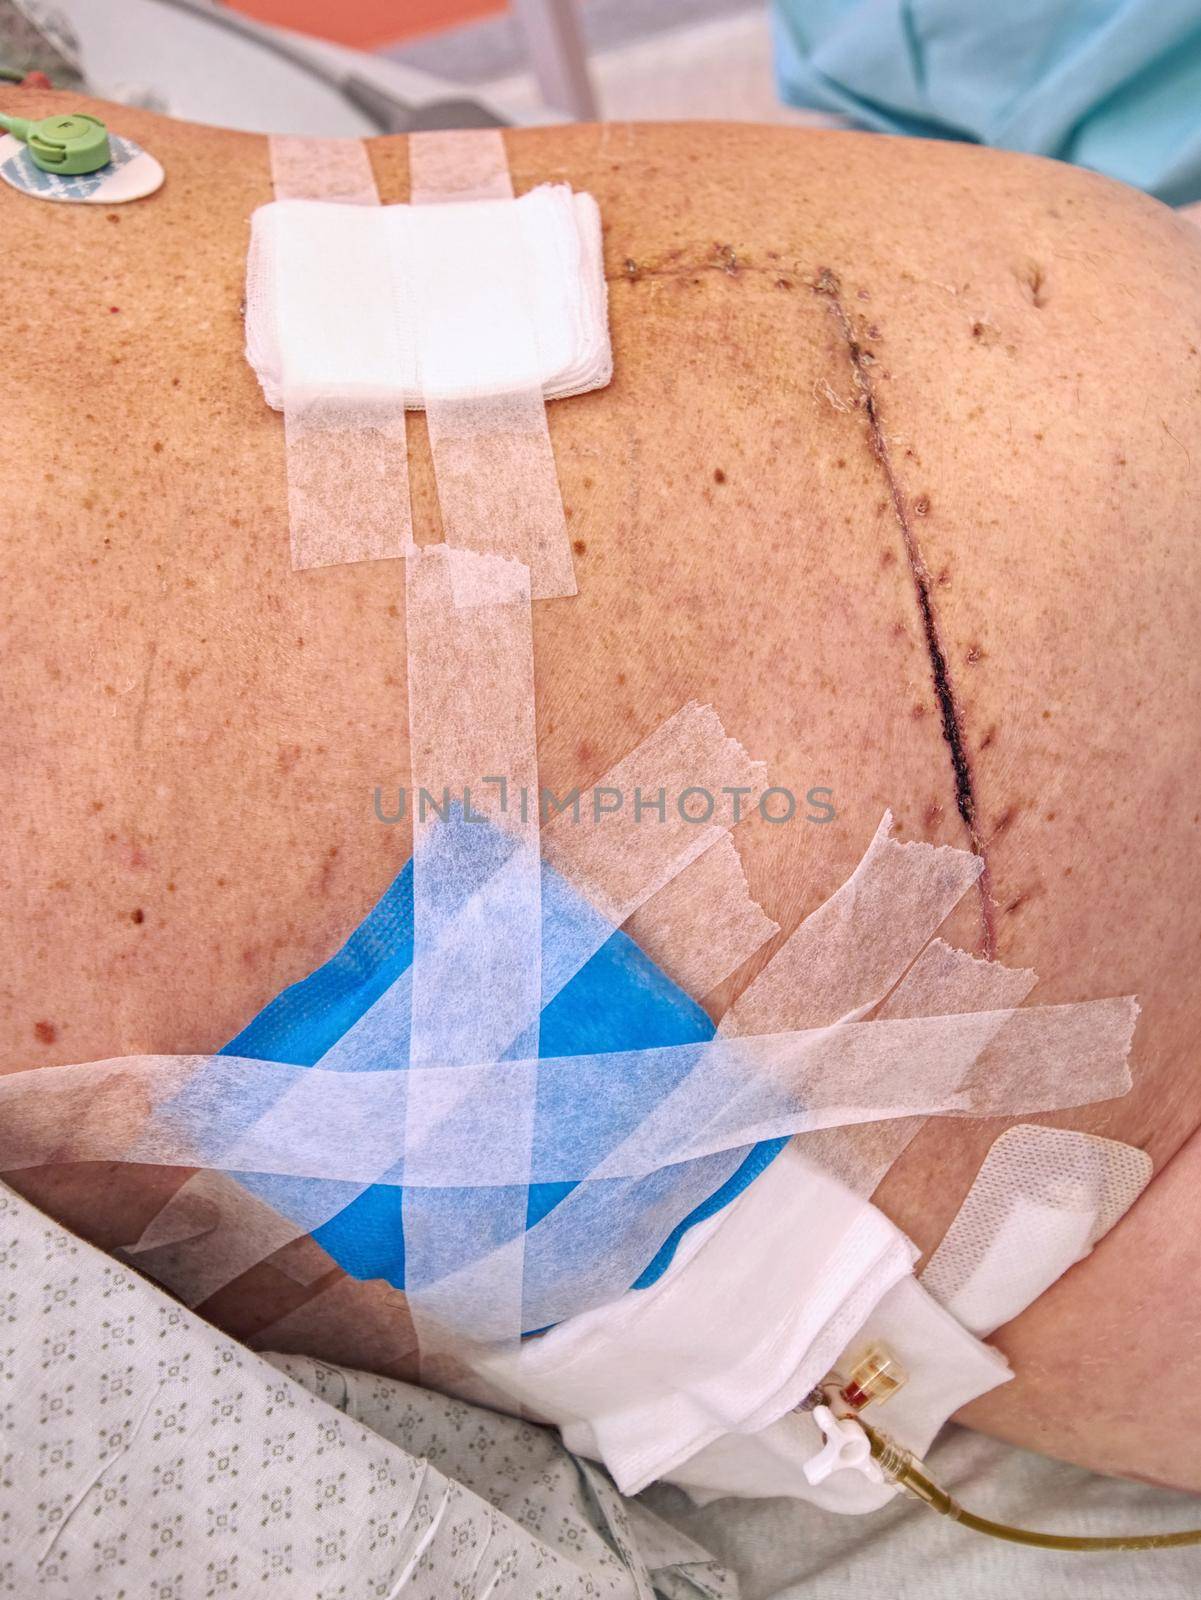 Patient shows a fresh, large scar after bowel and liver surger by rdonar2